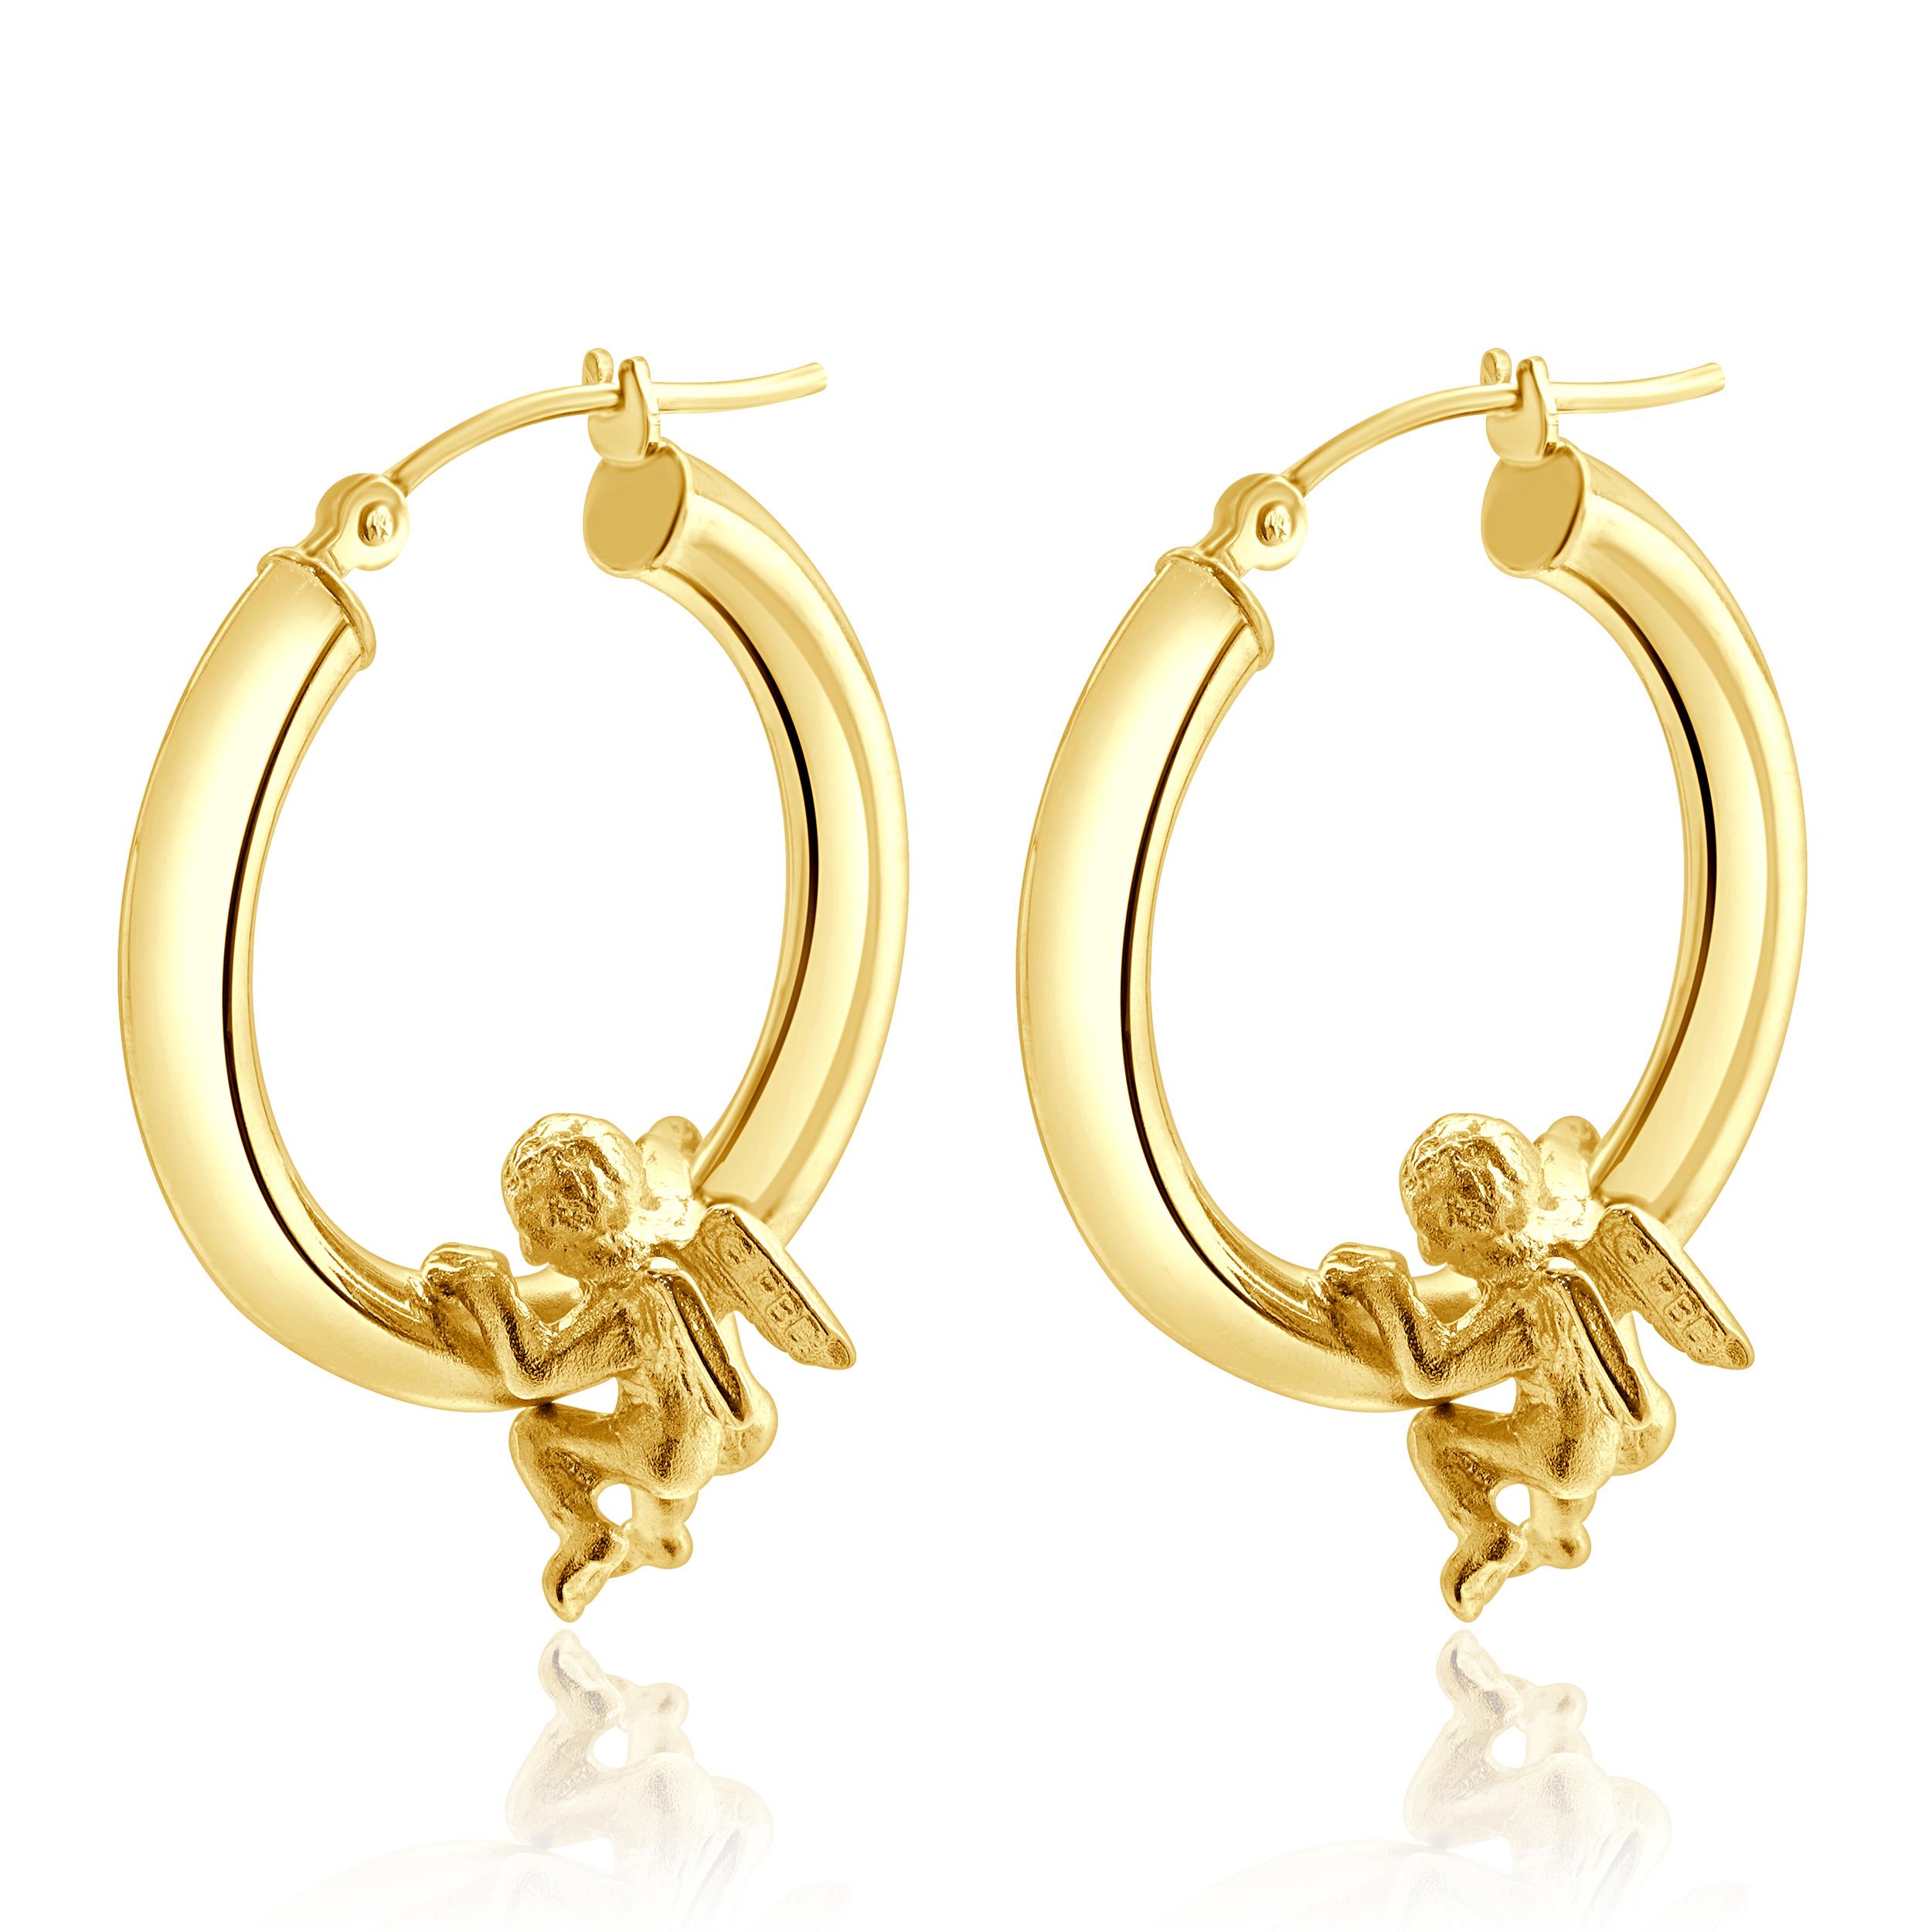 Material: 14K yellow gold
Dimensions: earrings measure 22.4mm
Weight:  3.93 grams